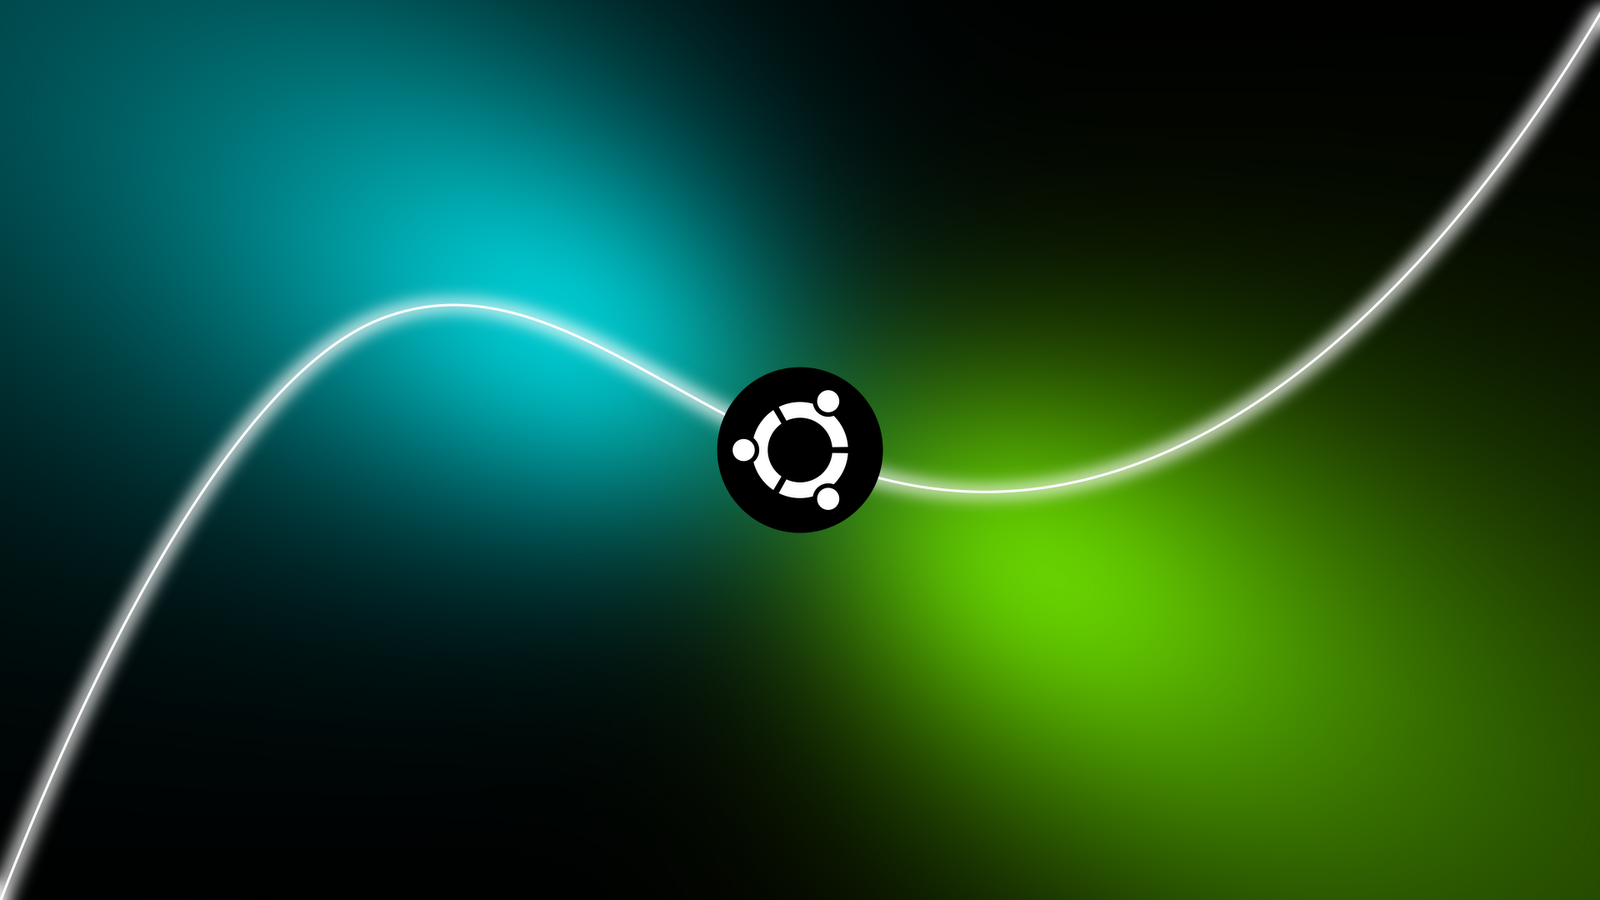 HD Linux Ubuntu Azul E Verde Seu Reposit Rio Wallpaper